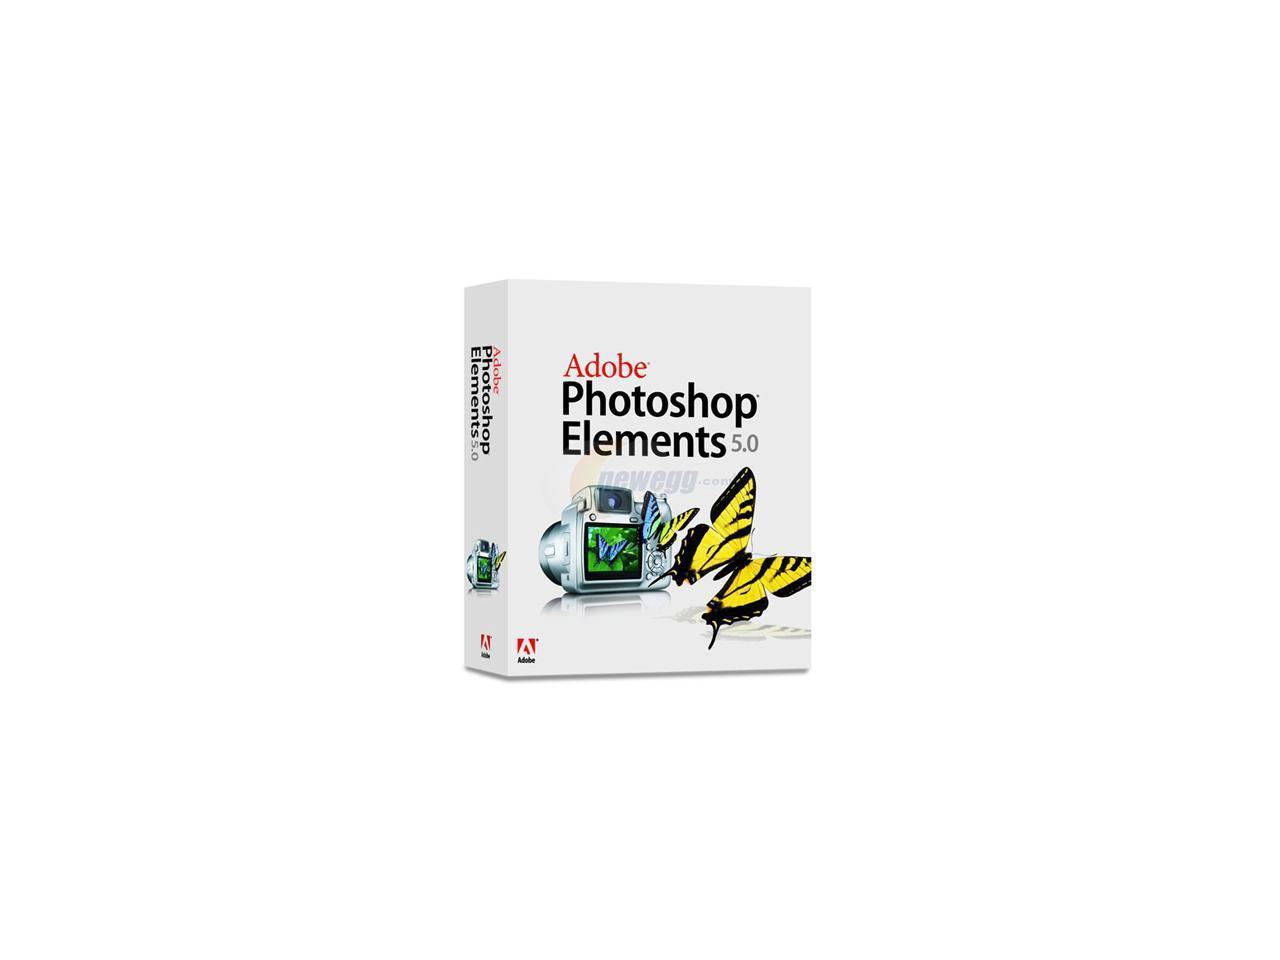 adobe photoshop elements 5.0 editor